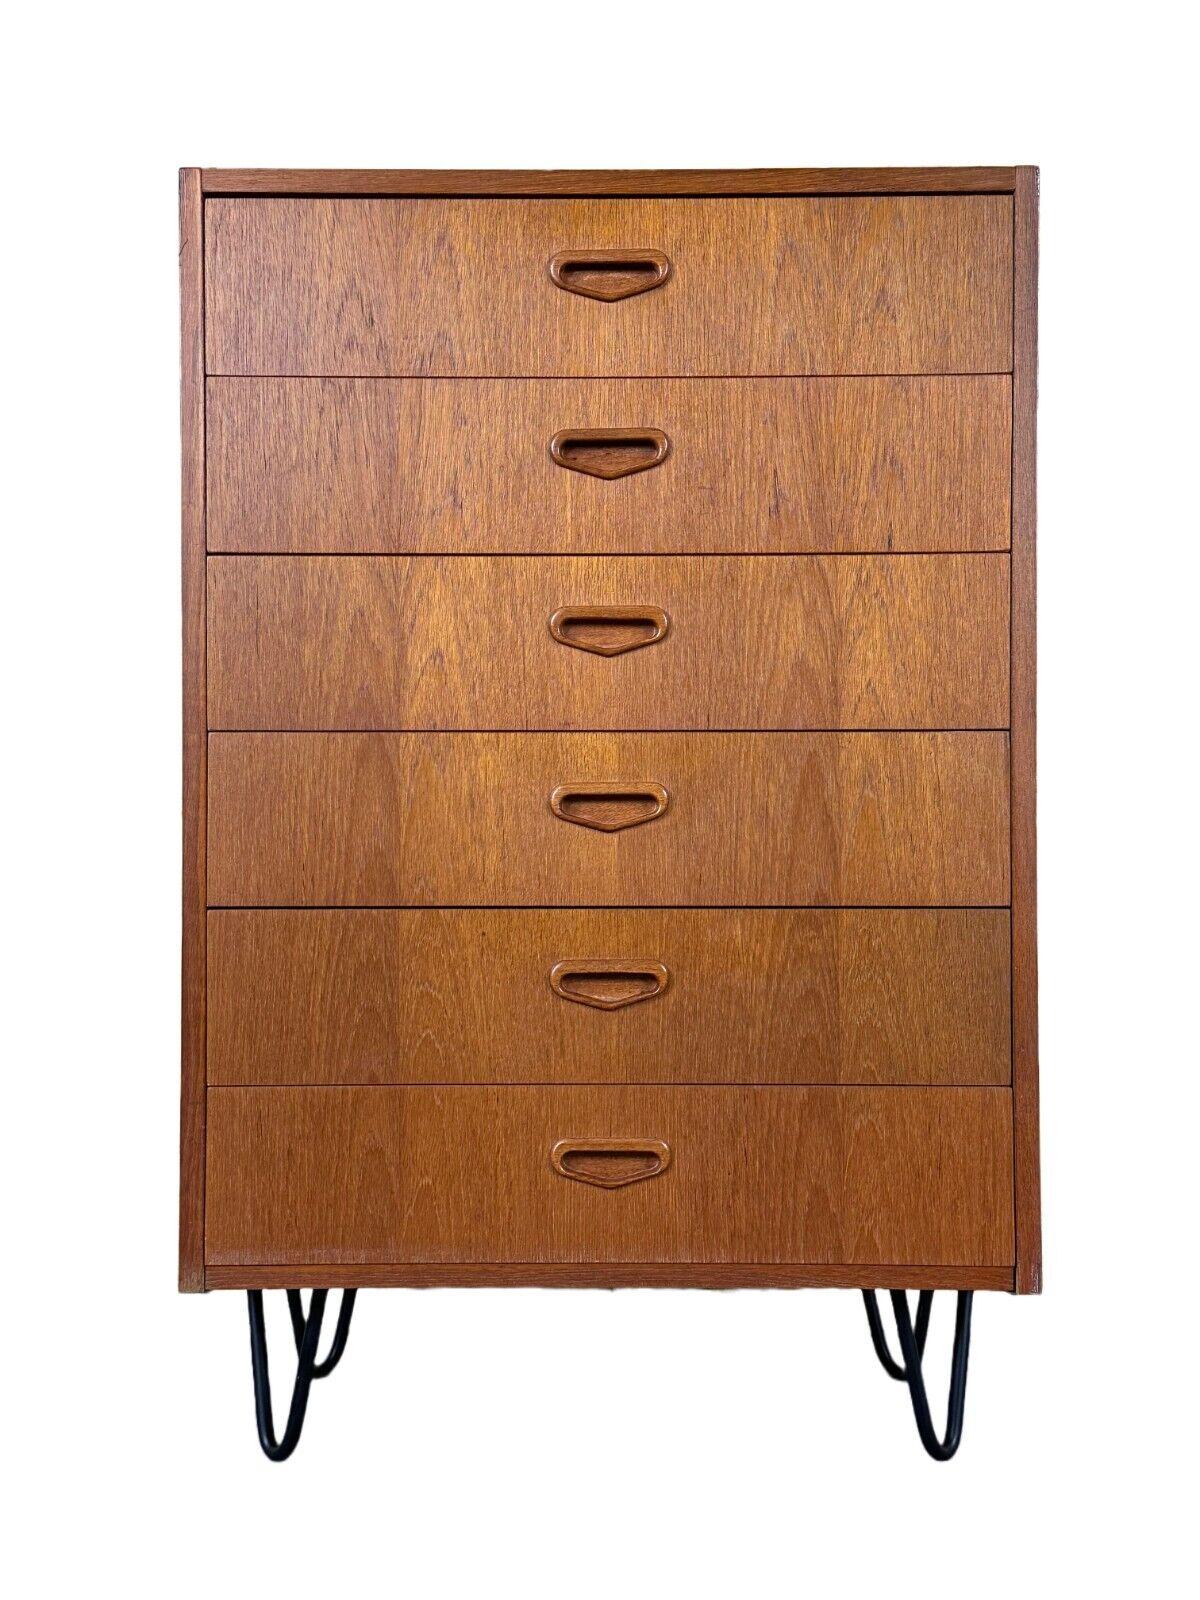 60s 70s teak sideboard chest of drawers cabinet Danish Modern Design Denmark

Object: sideboard

Manufacturer:

Condition: good - vintage

Age: around 1960-1970

Dimensions:

Width = 60cm
Depth = 33cm
Height = 92.5cm

Material: teak, metal

Other